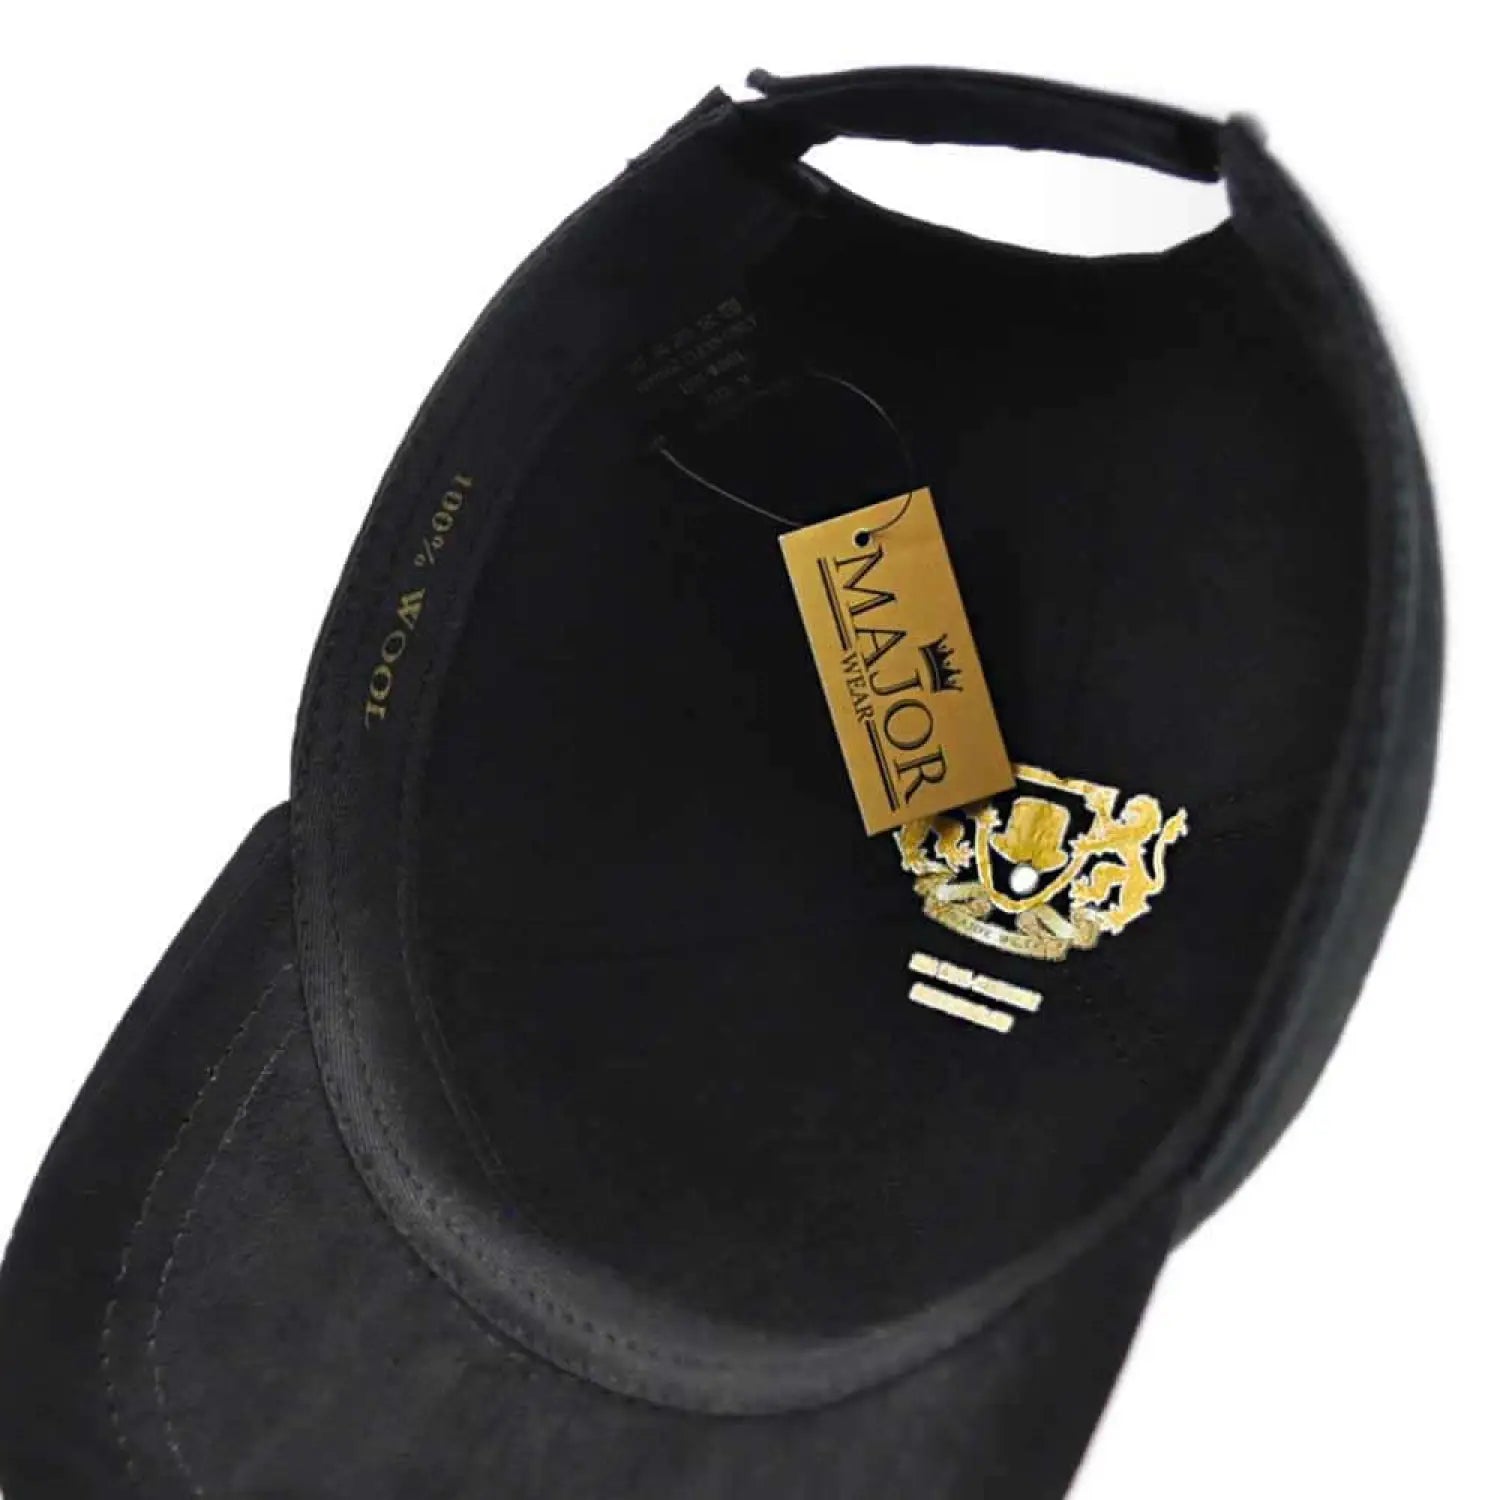 Chic wool felt baseball cap with gold logo - unisex retro design